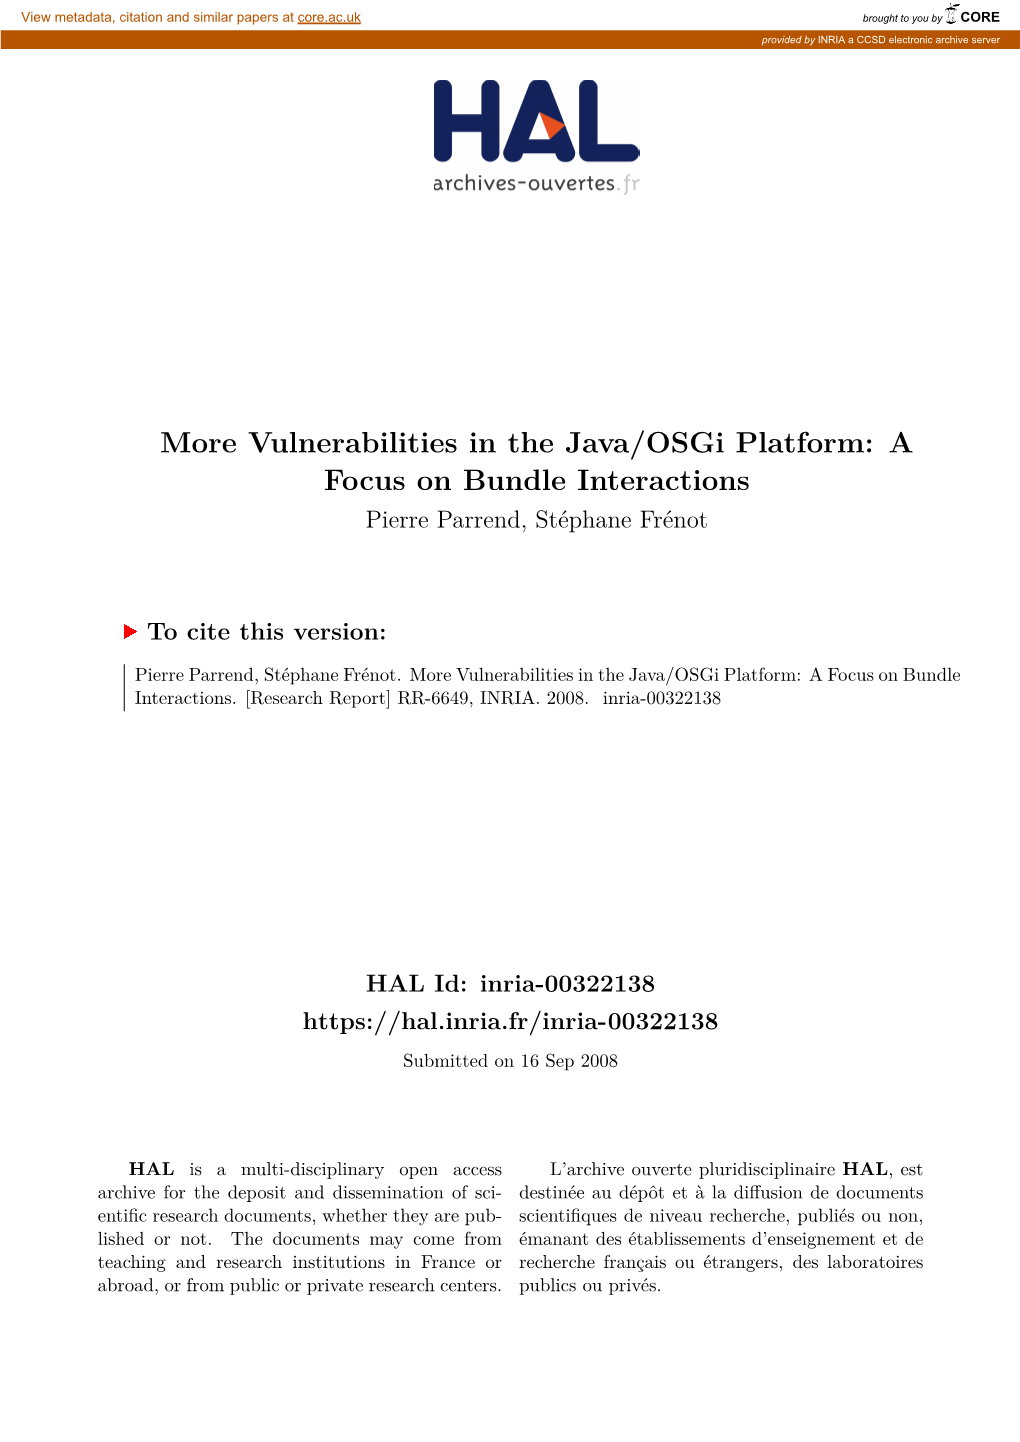 Vulnerabilities in the Java/Osgi Platform: a Focus on Bundle Interactions Pierre Parrend, Stéphane Frénot